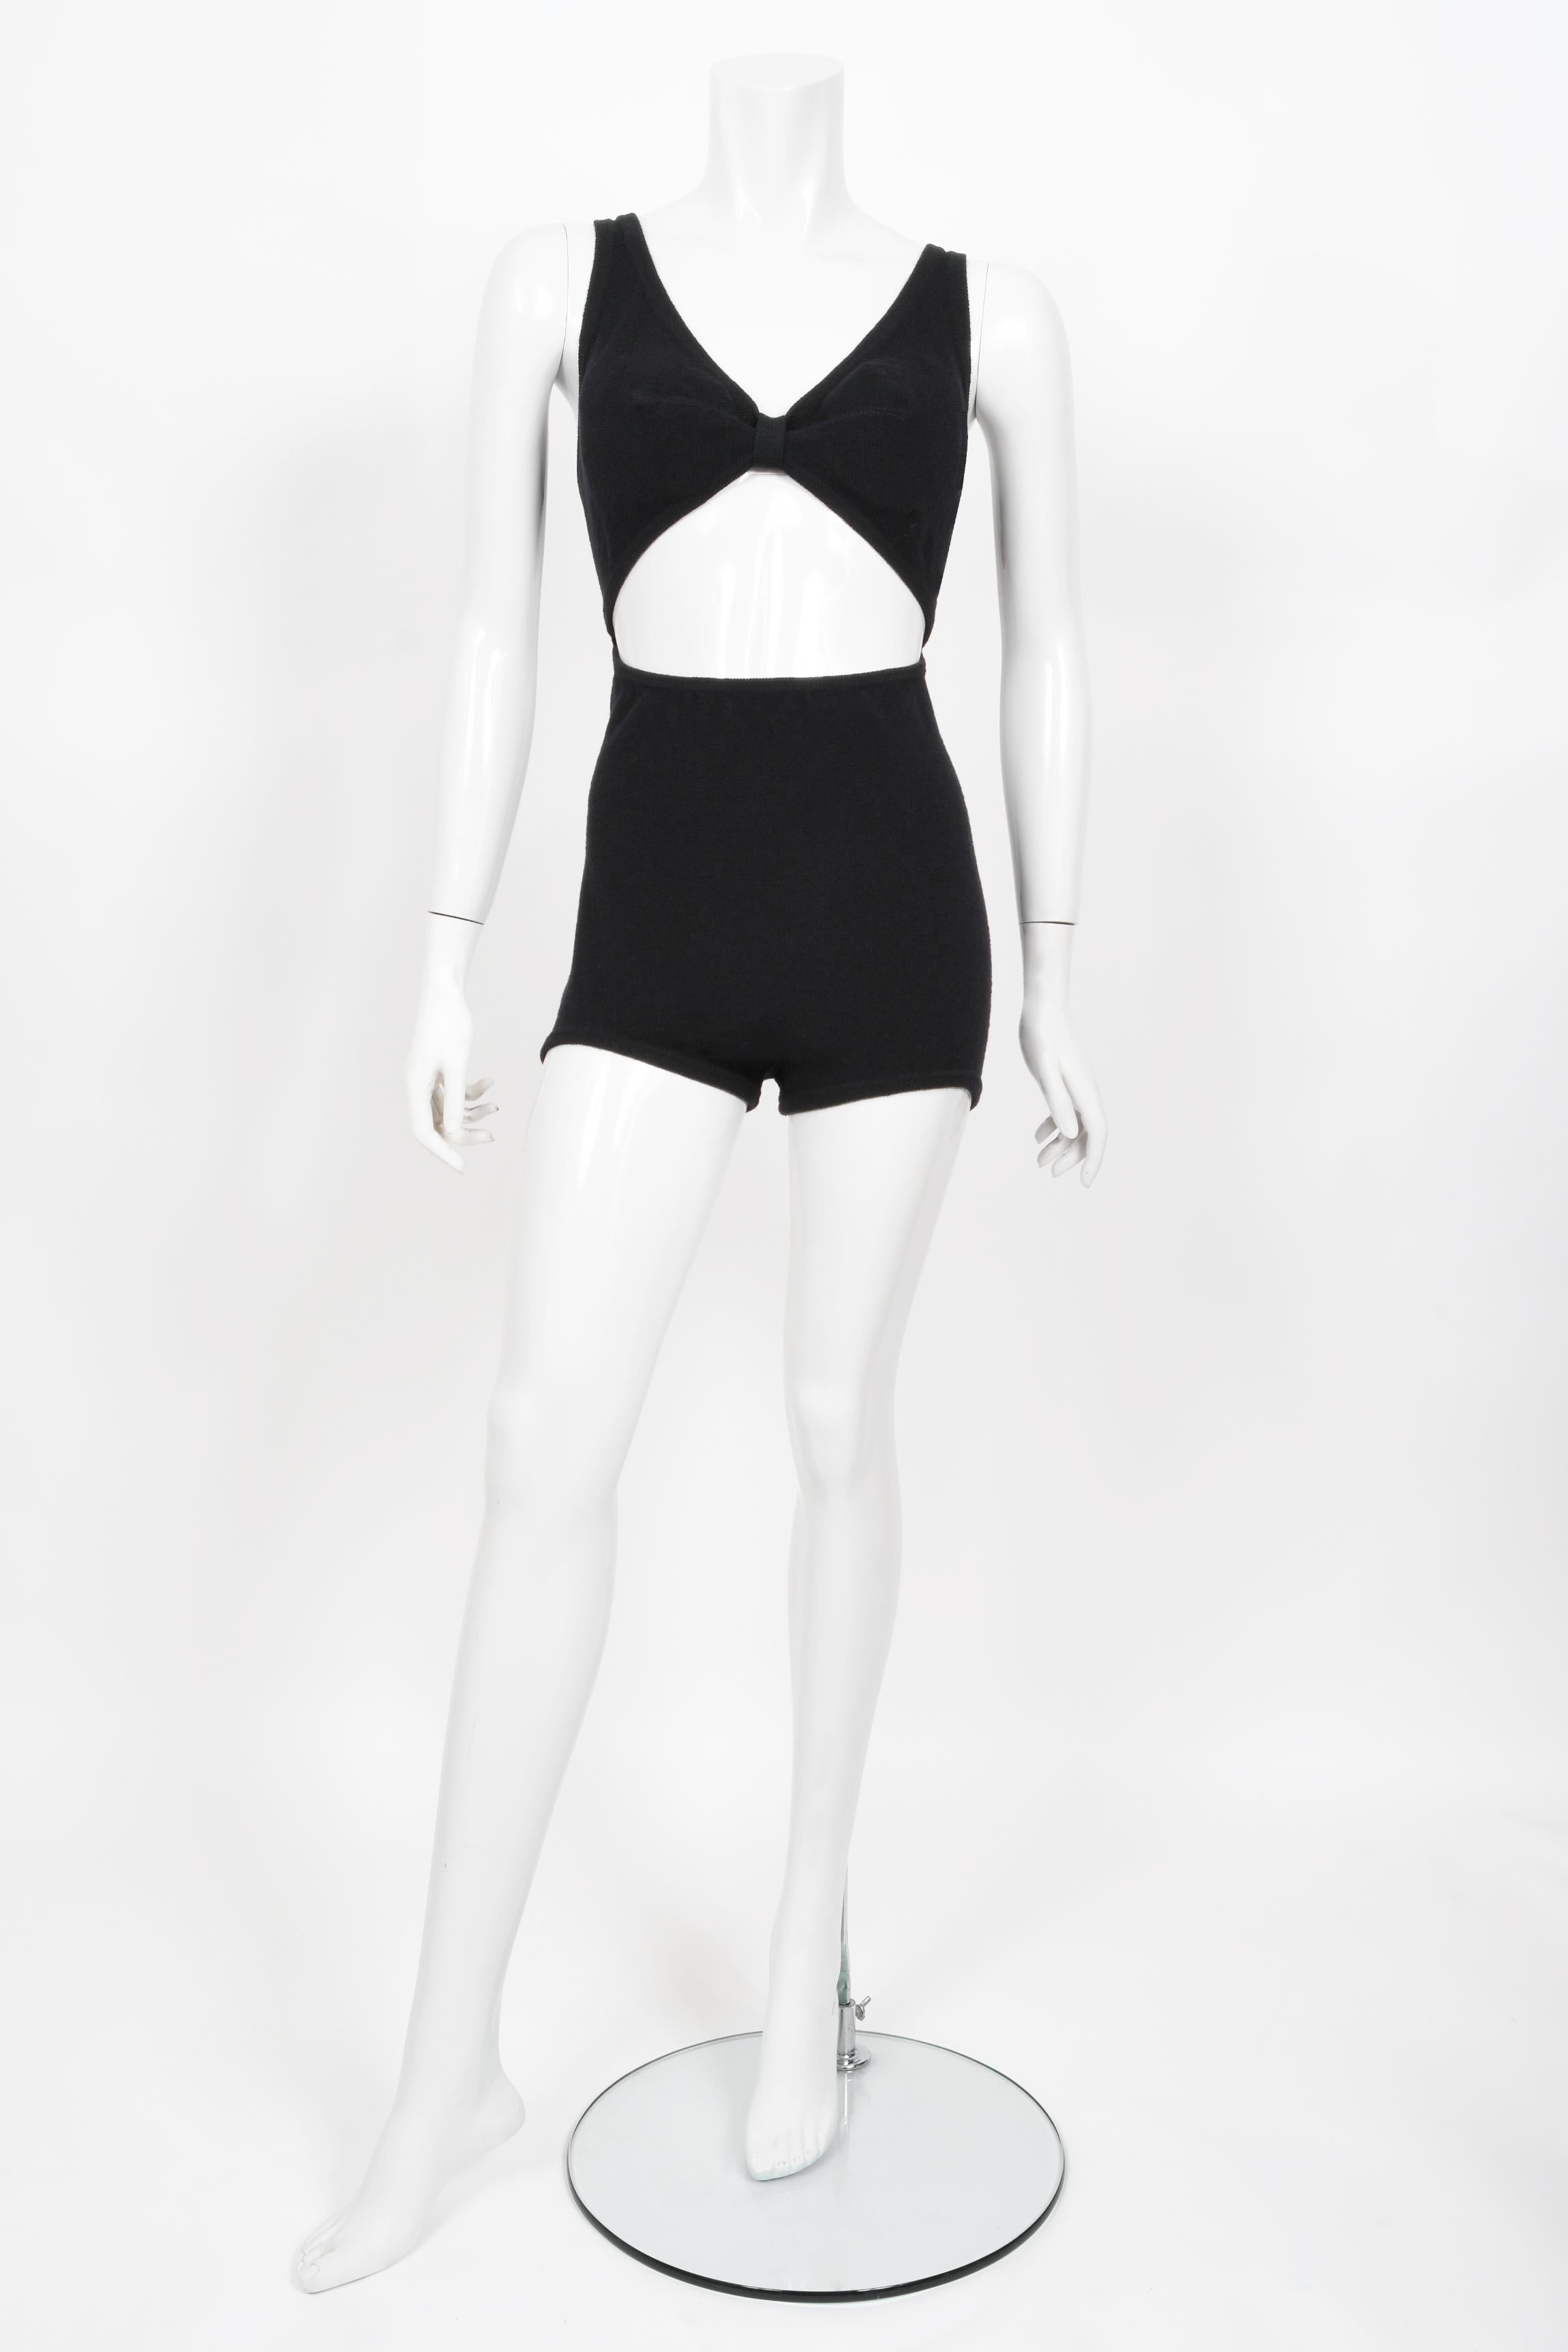 Noir Vintage 1968 Rudi Gernreich Museum-Held Black Wool Jersey Cut Out Mod Swimsuit  en vente